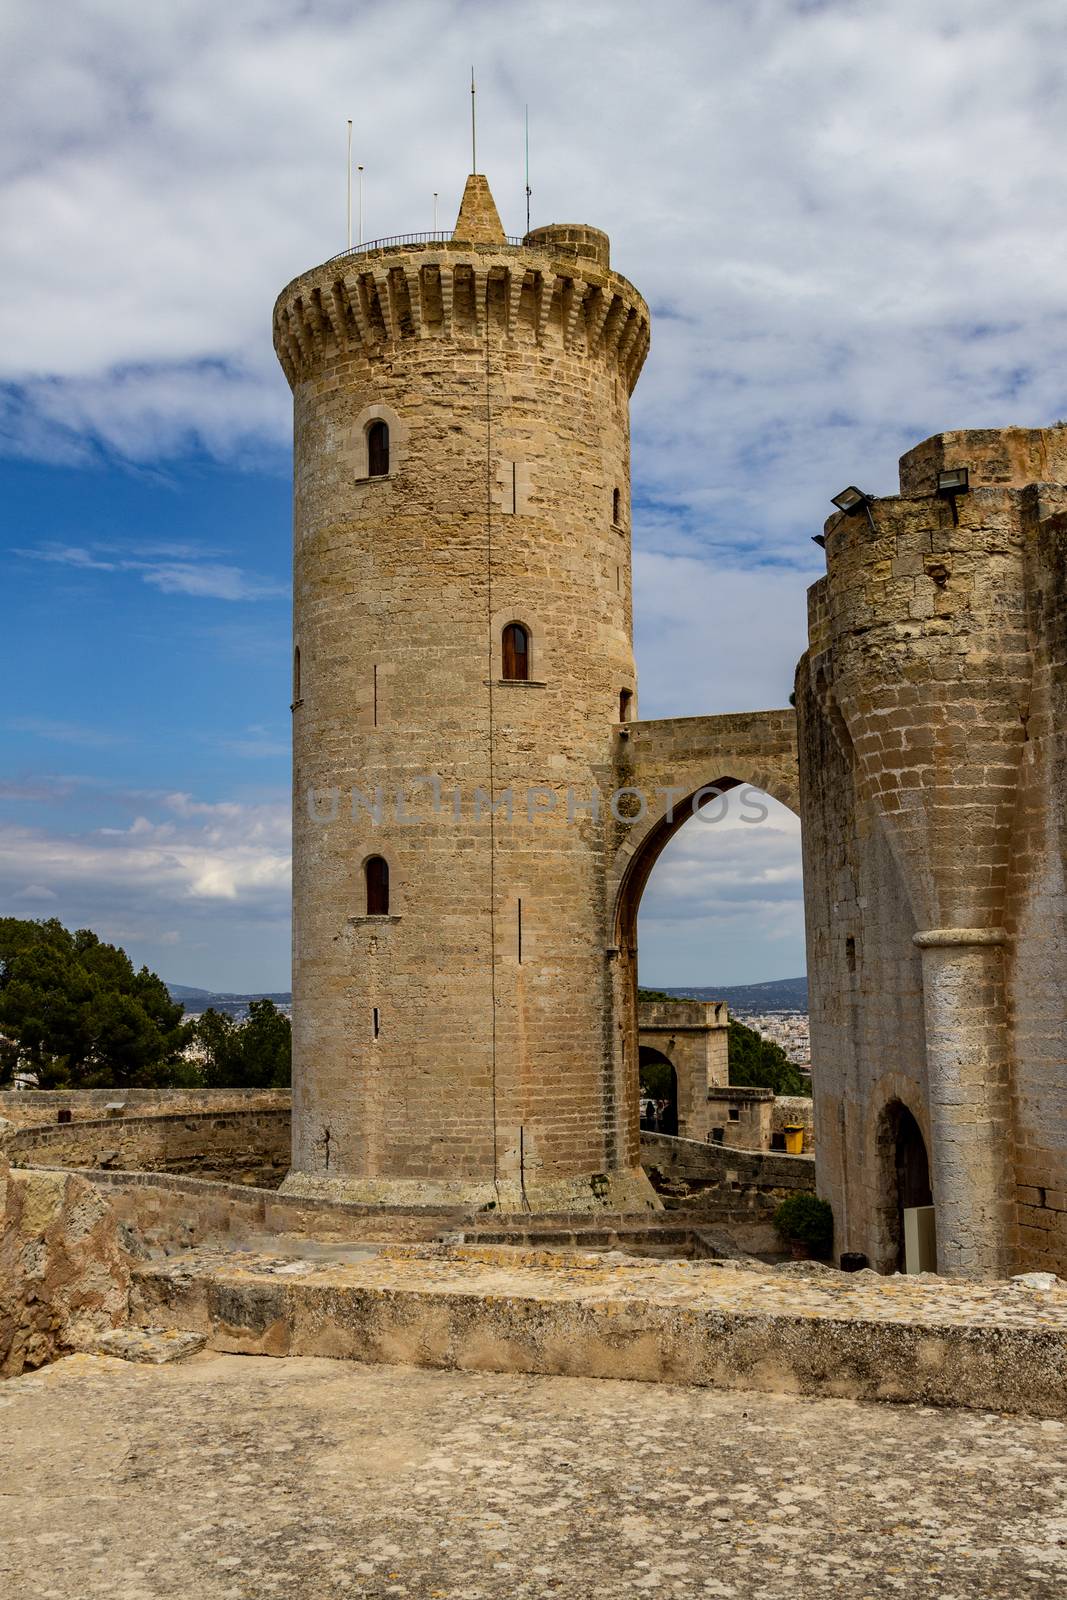 Castell de Bellver in Palma de Mallorca, Spain by reinerc